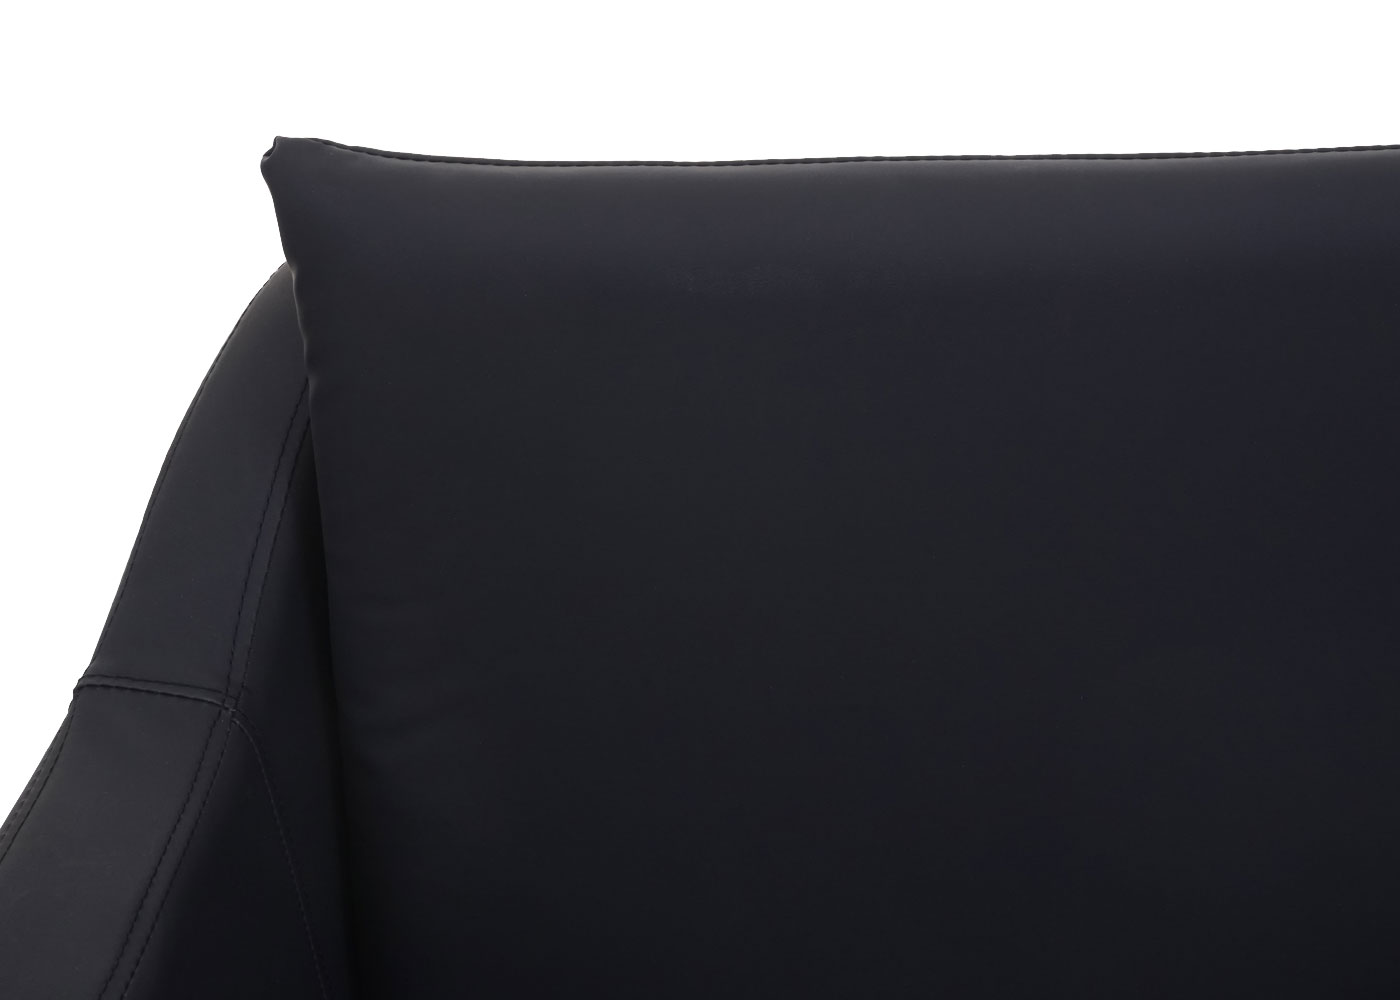 Lounge-Sessel HWC-H93a Detailansicht Rückenlehne